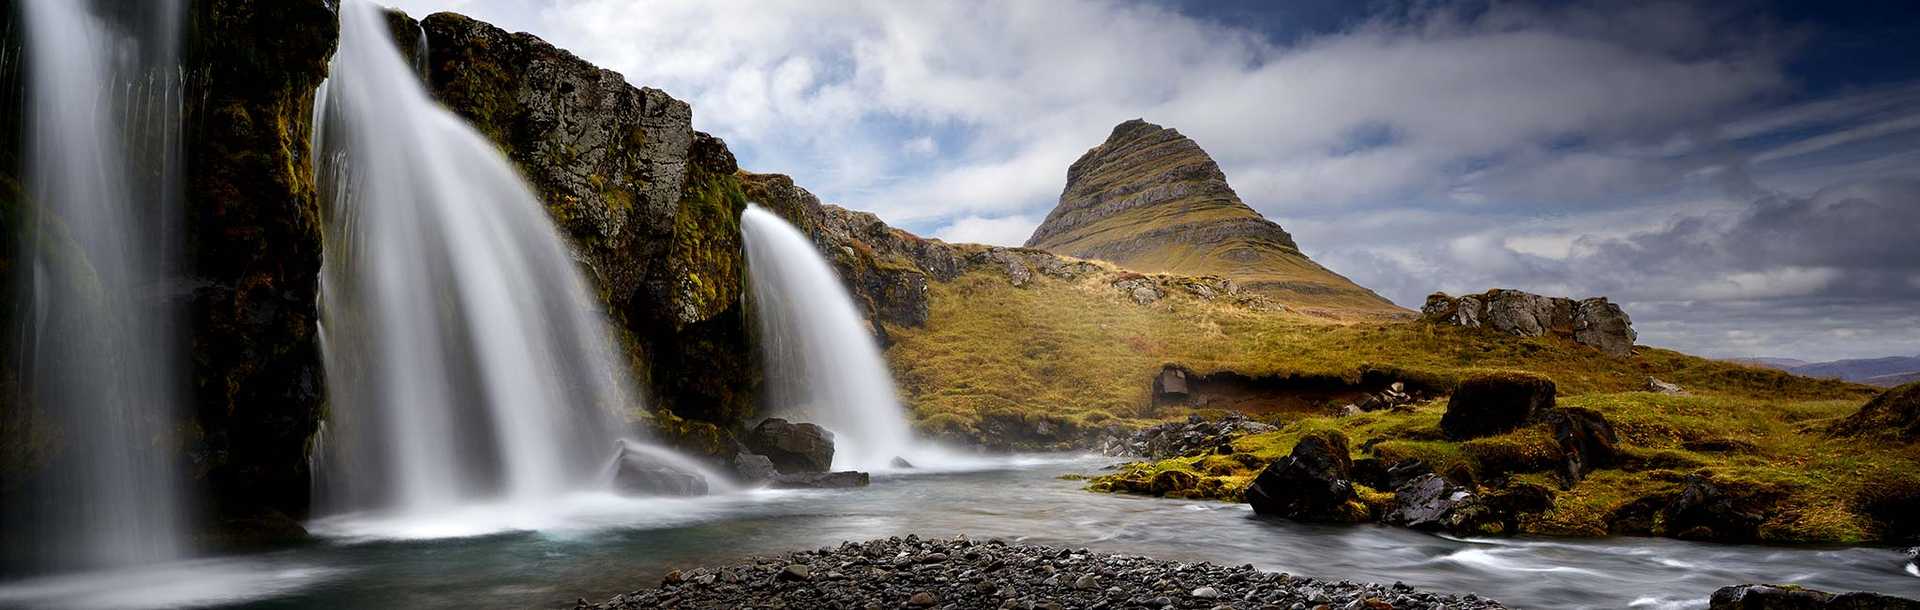 Waterfalls and Kirkjufell mountain in Iceland